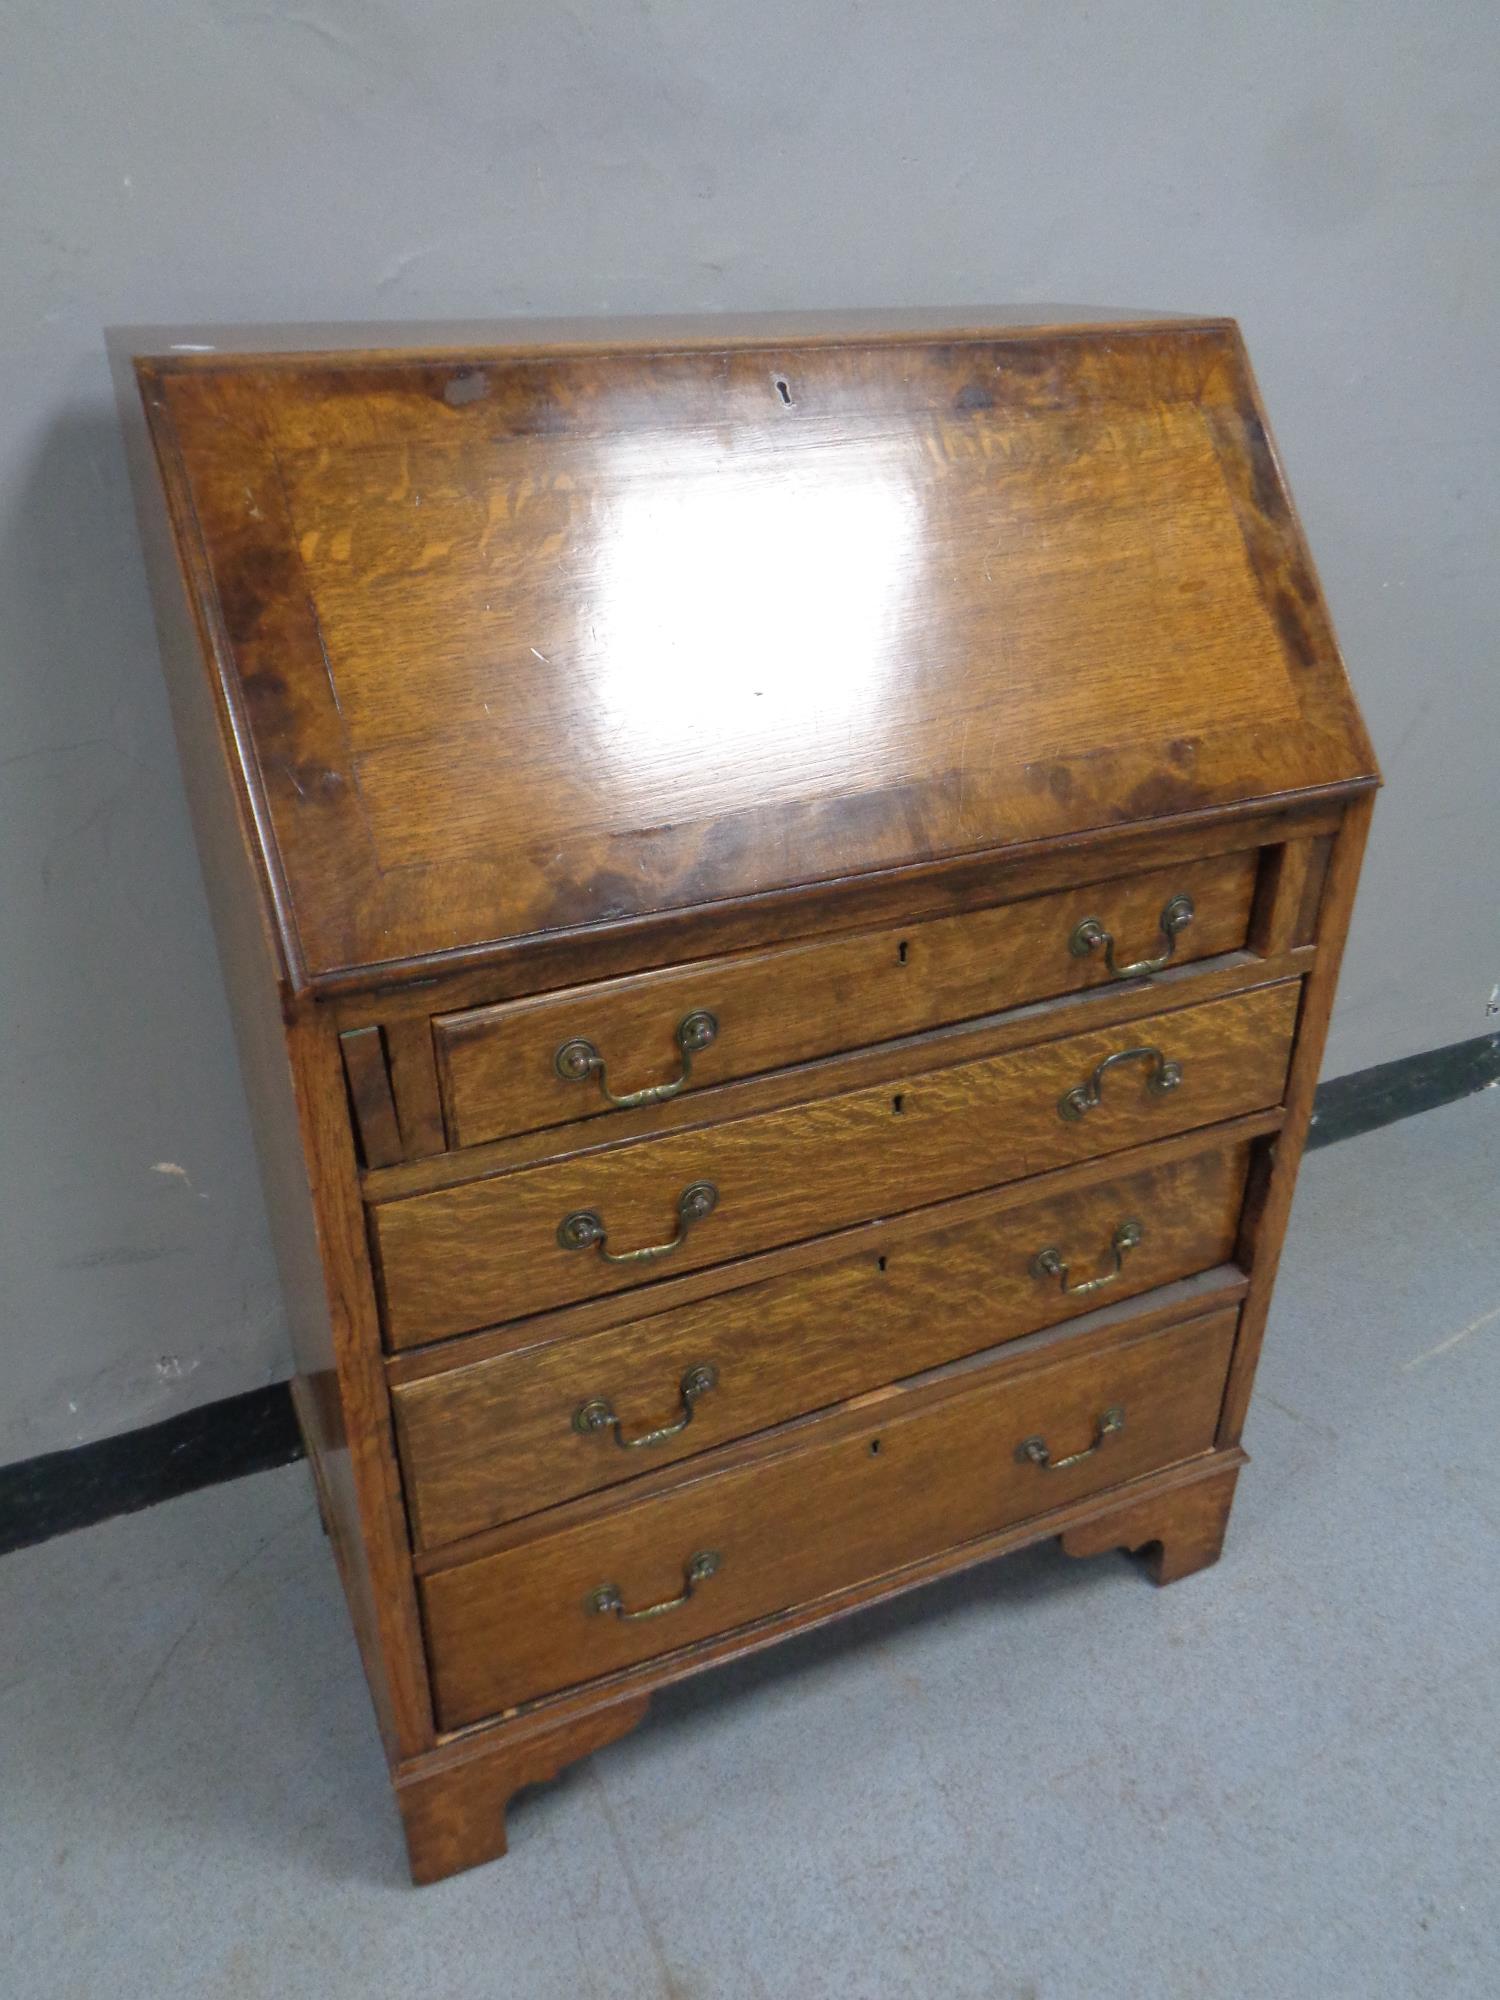 A 19th century oak writing bureau fitted four drawers beneath